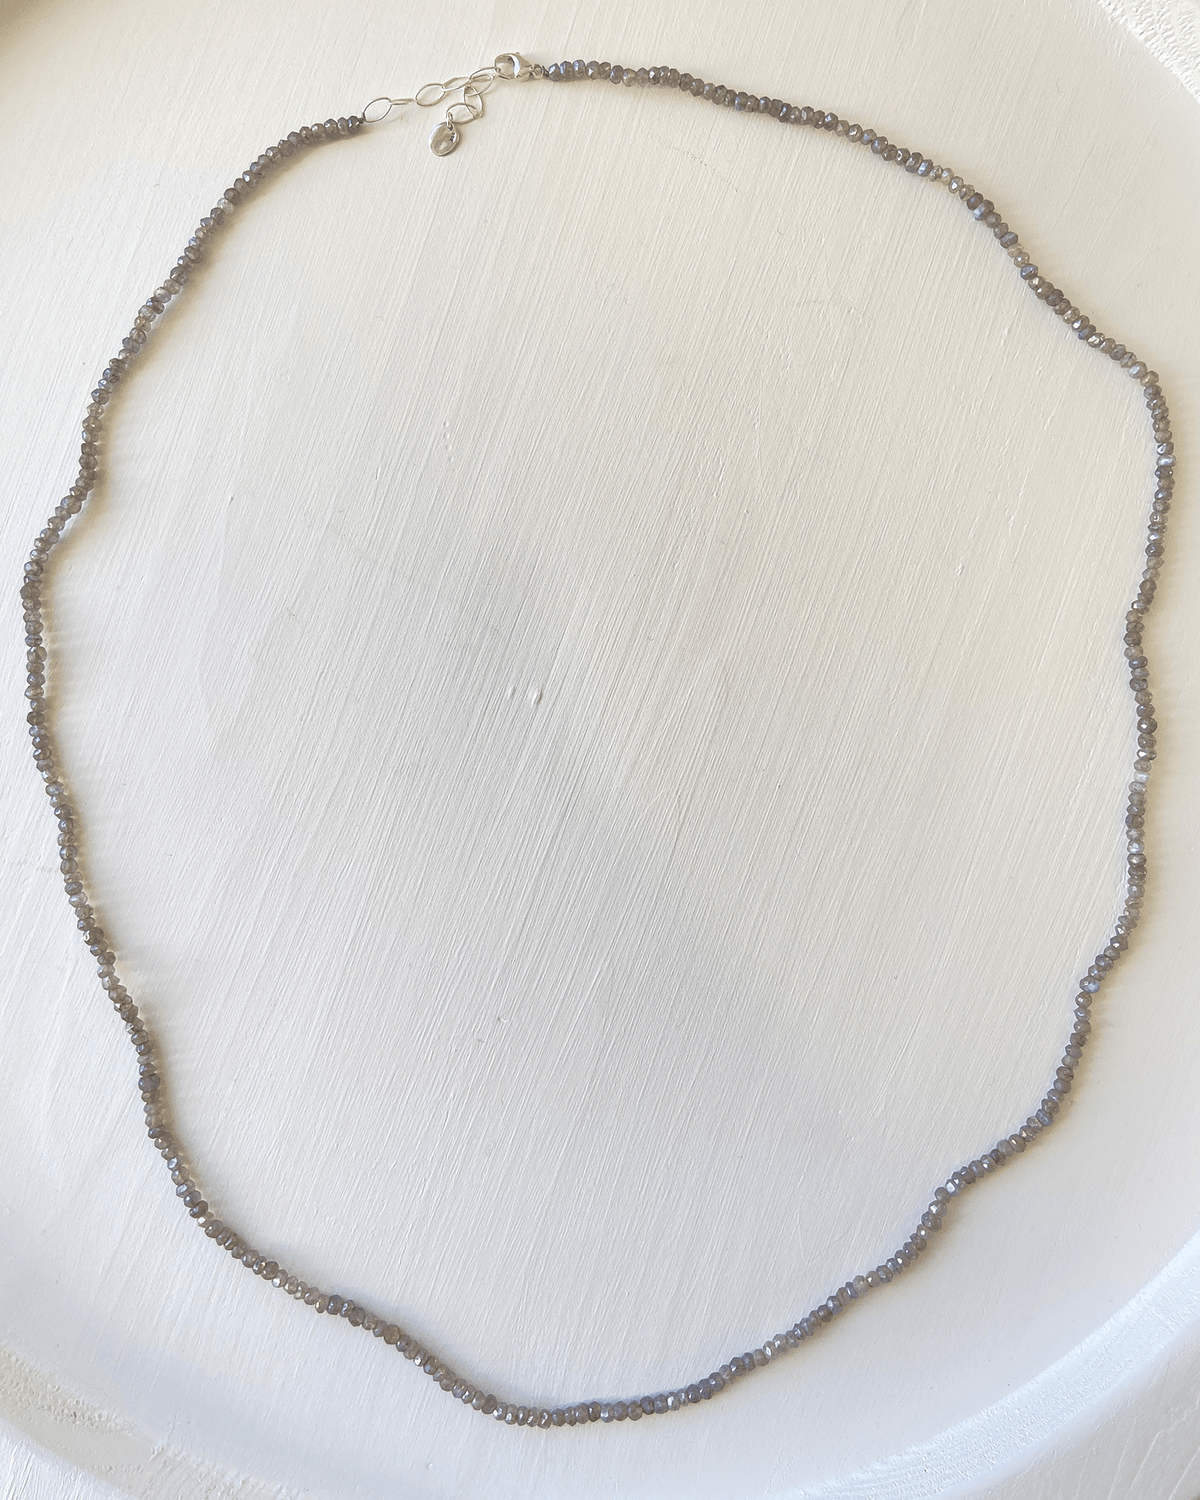 Chan Luu Jewelry Labradorite/SS Naked Wrap Bracelet in Mystic Labradorite w/ SS